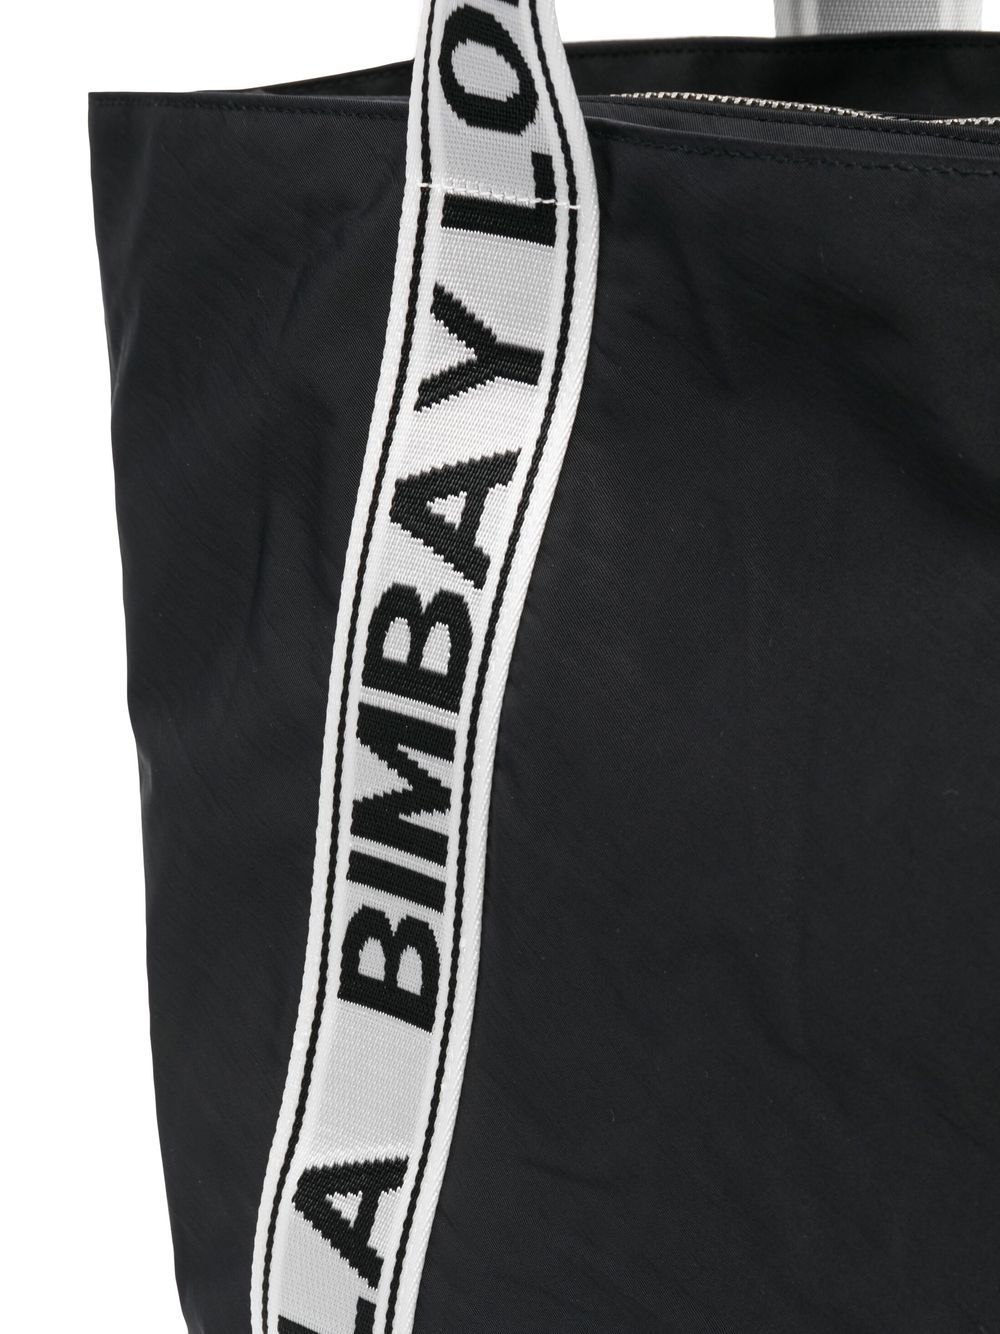 Bimba Y Lola Logo-Straps Tote Bag - Black